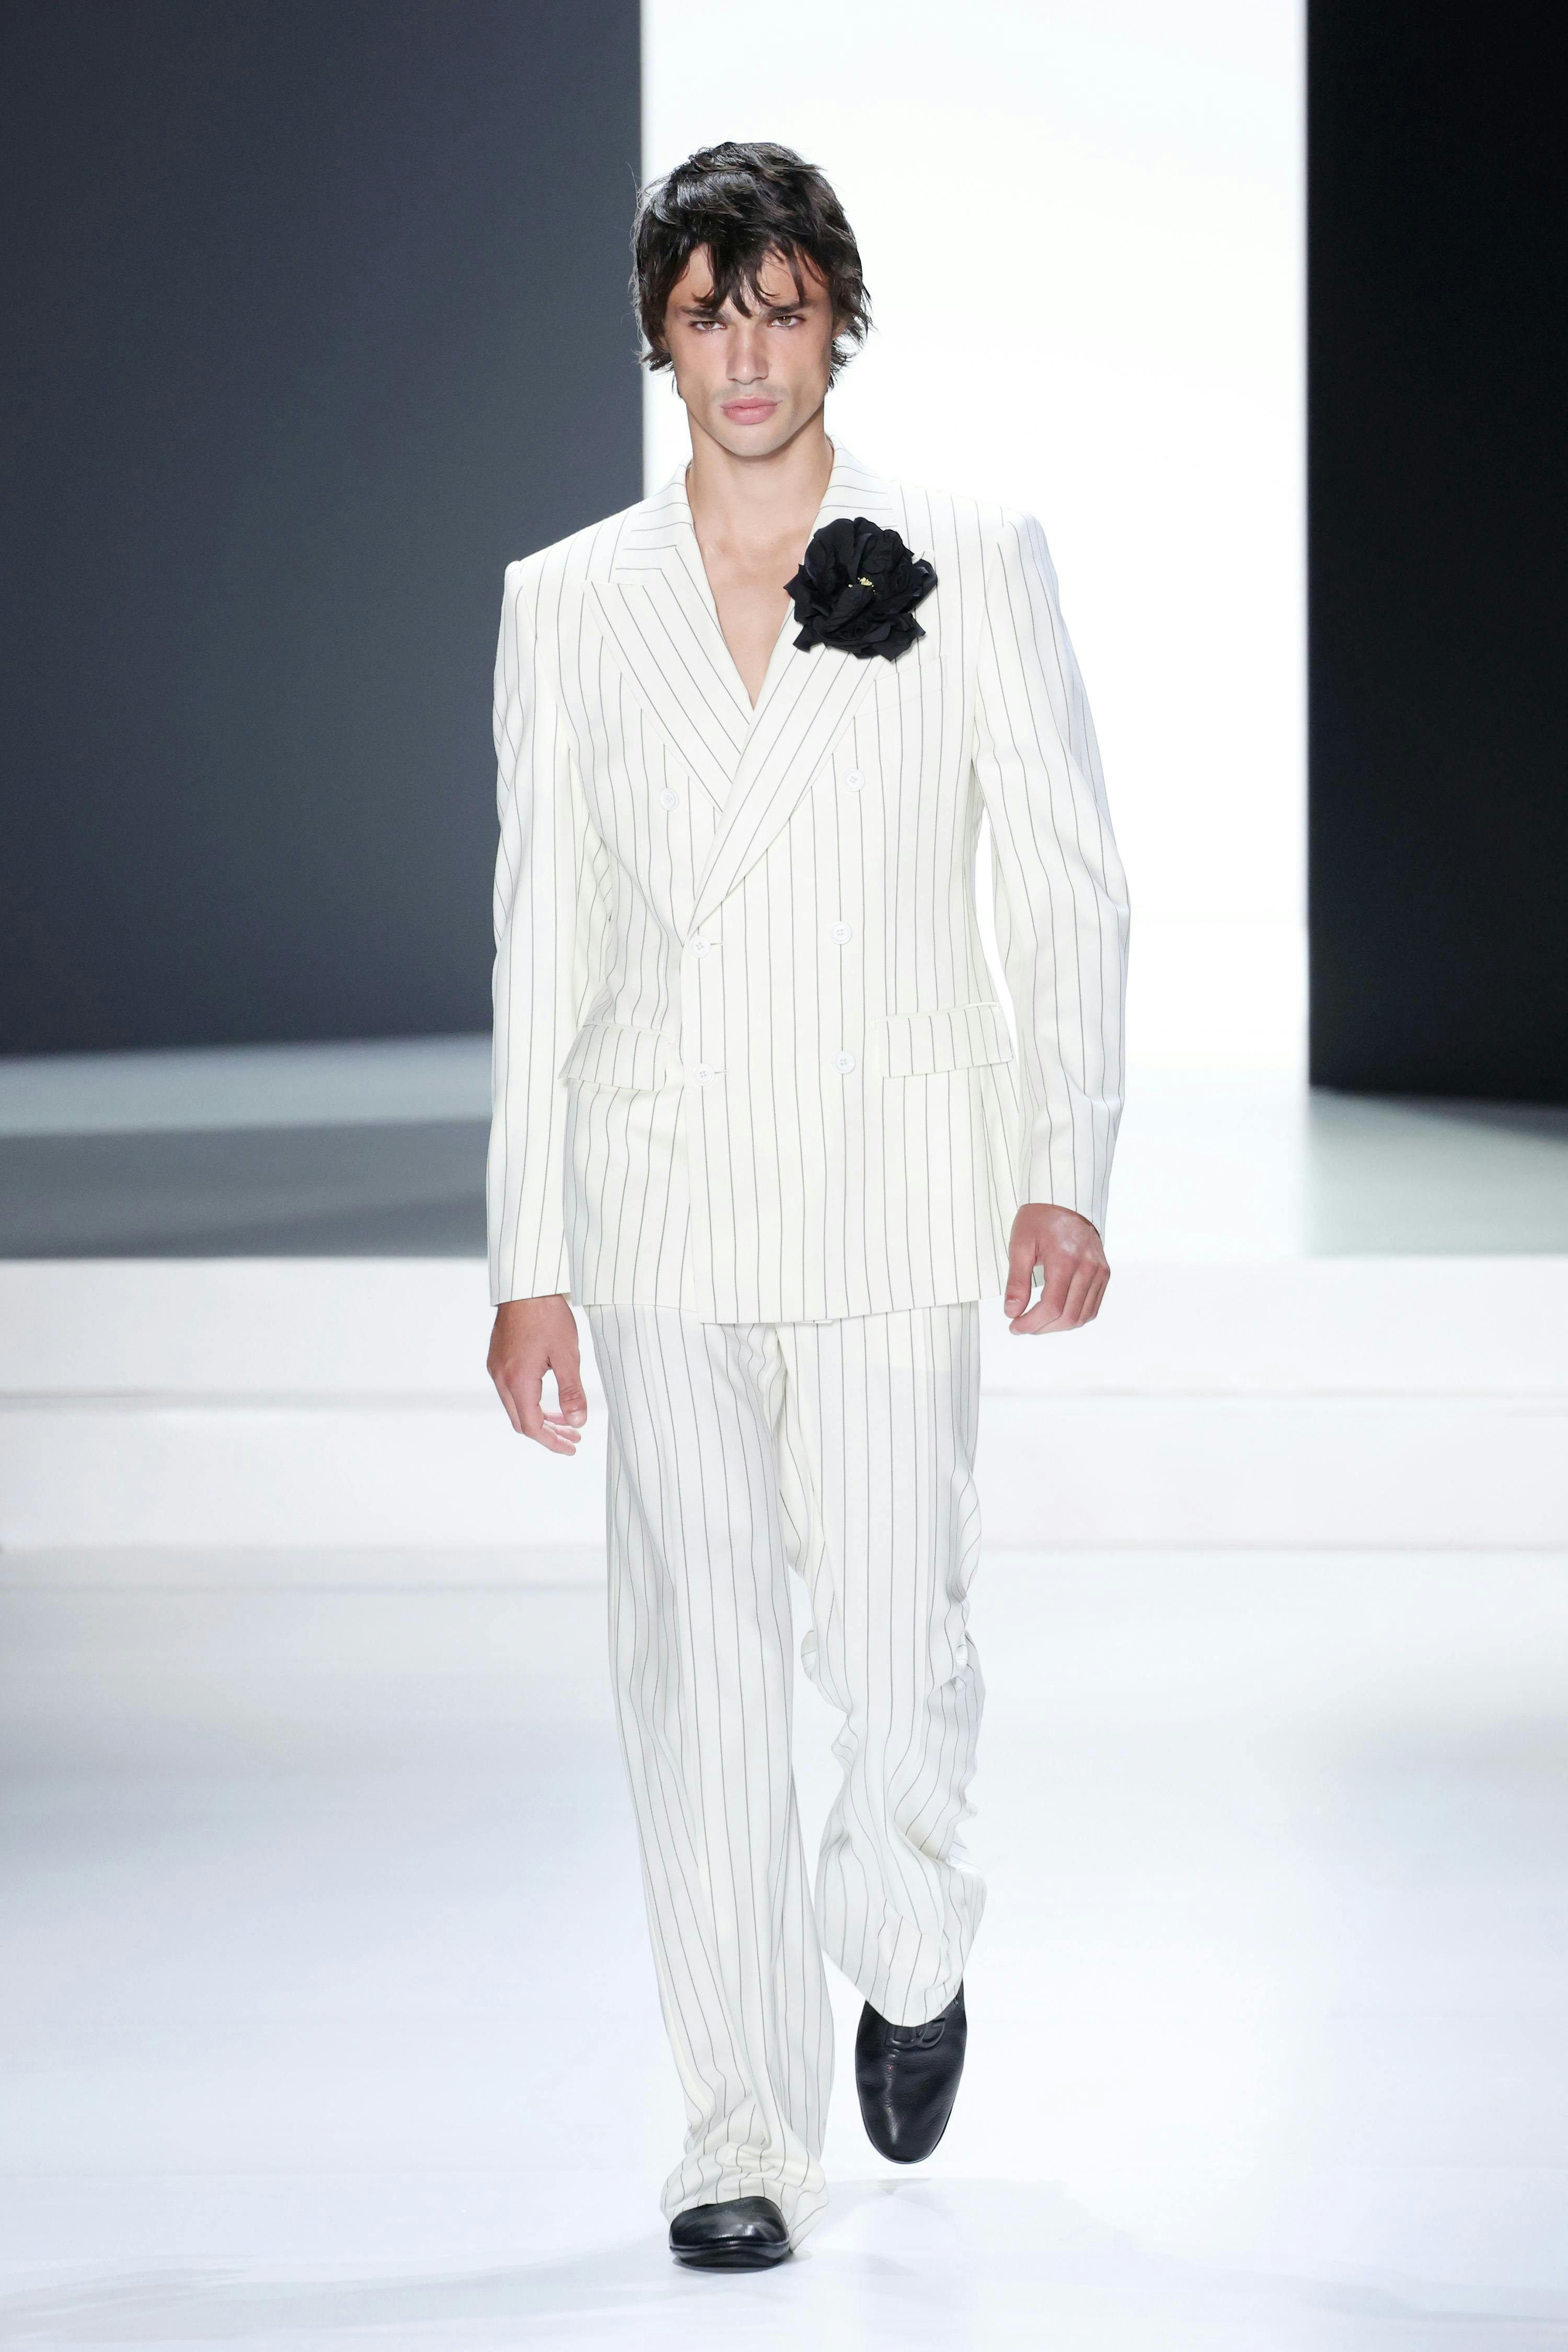 milan clothing formal wear suit fashion adult male man person pajamas